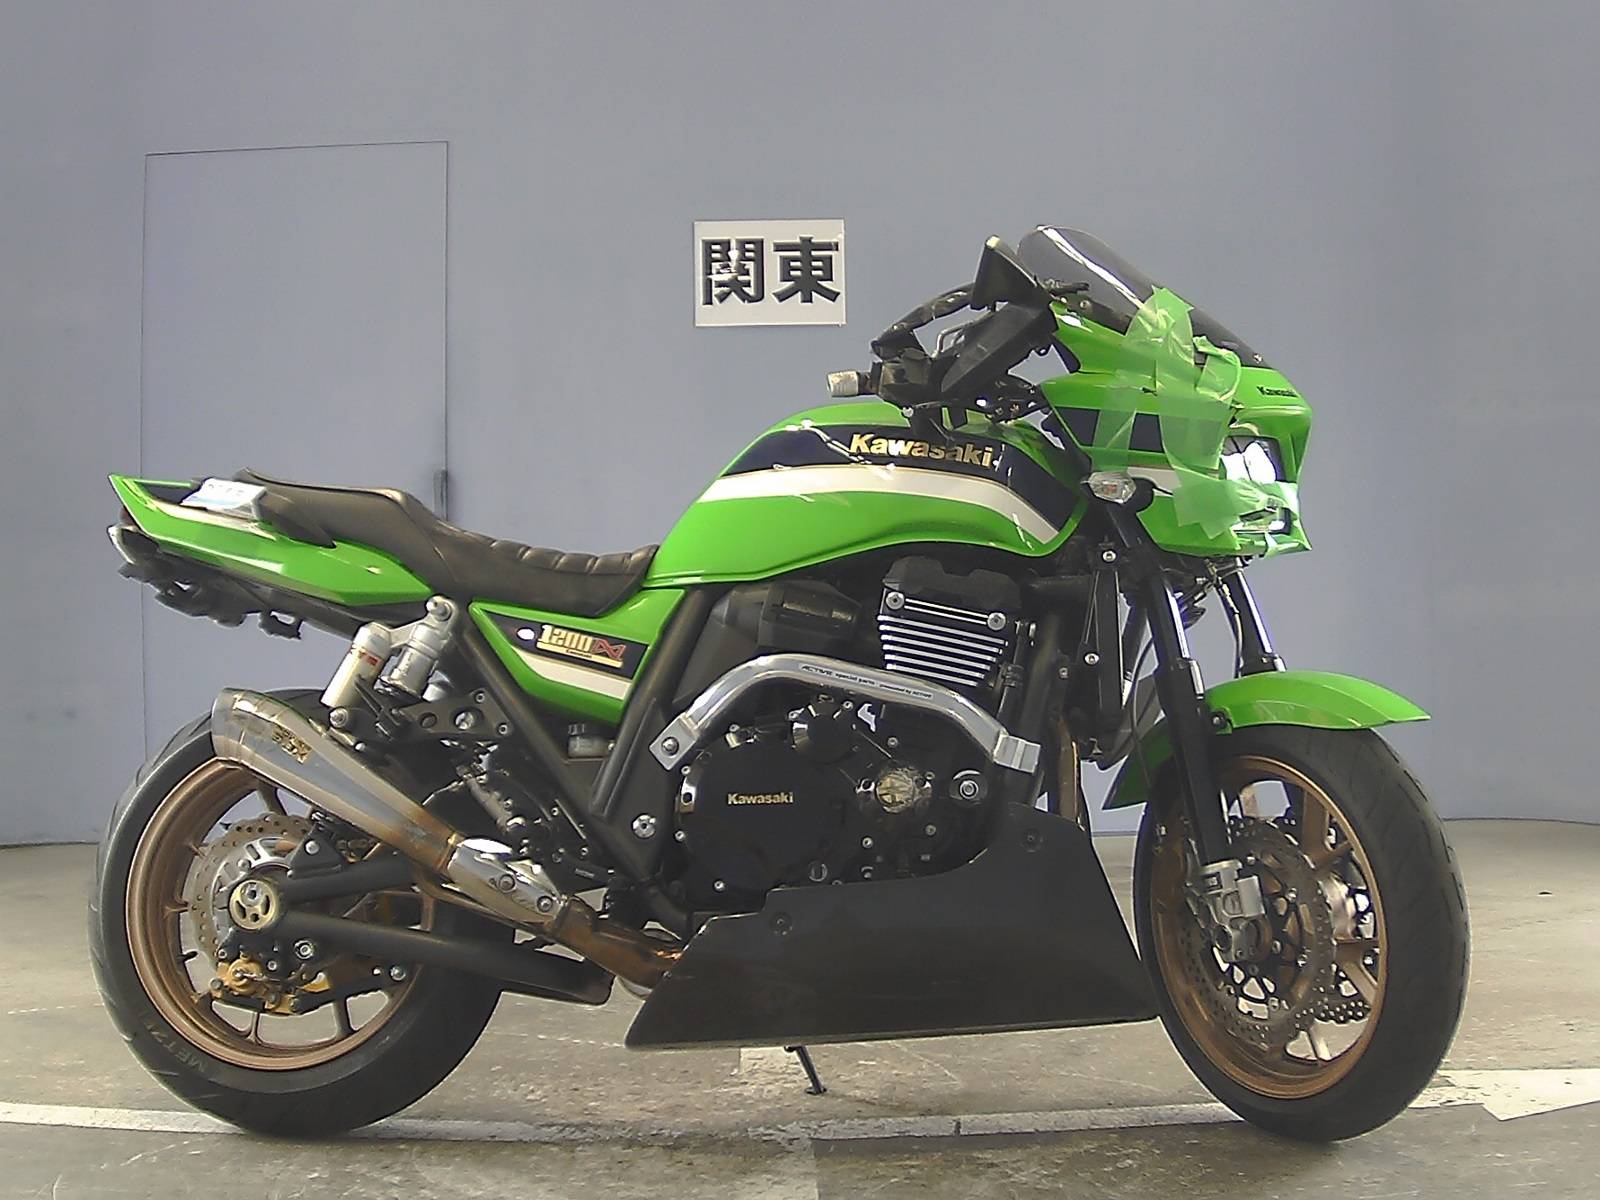 Kawasaki z h2 2021 нейкед с компрессором. подробности и большой тест